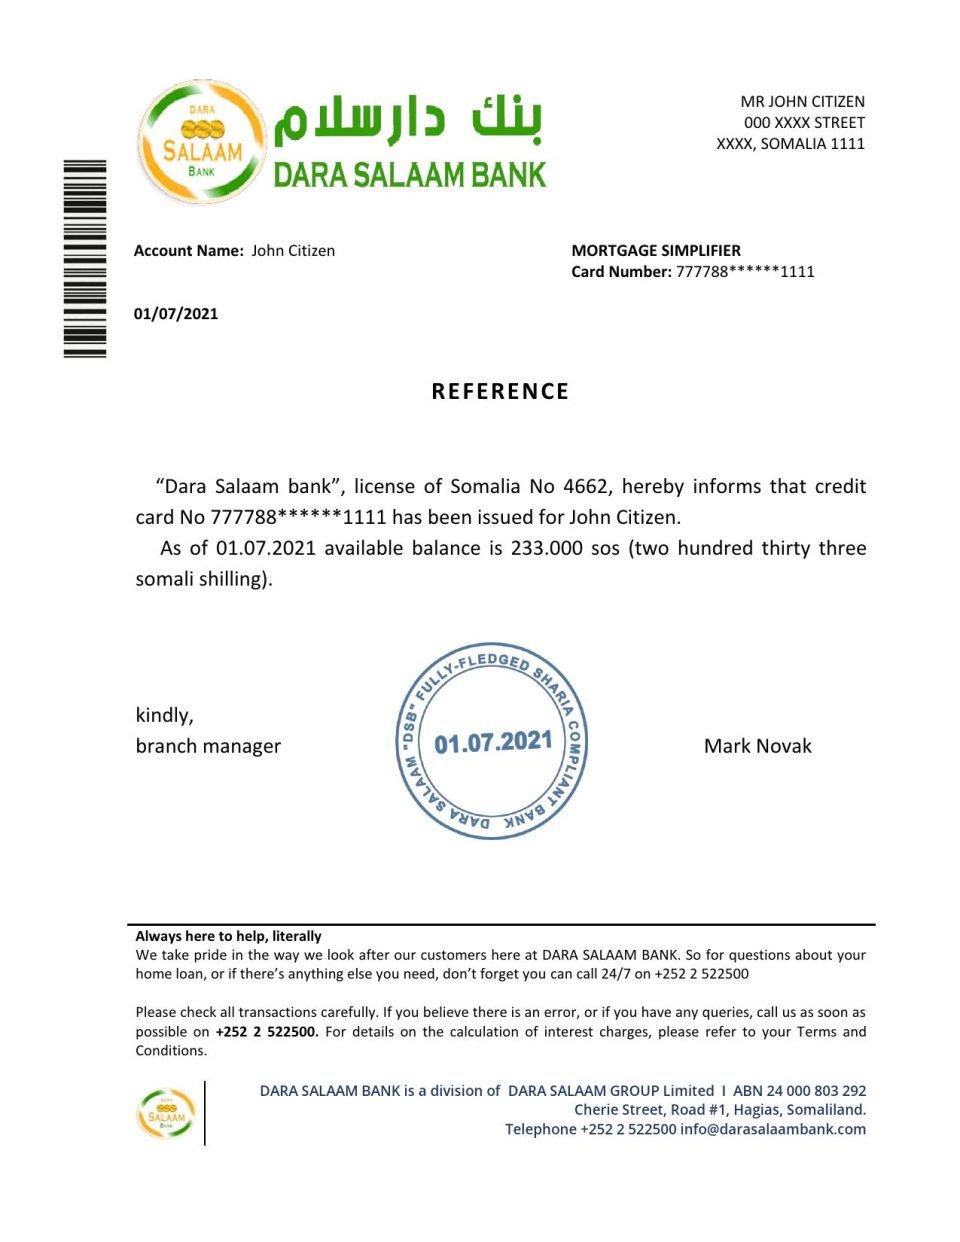 Download Somalia Dara Salaam Bank Reference Letter Templates | Editable Word